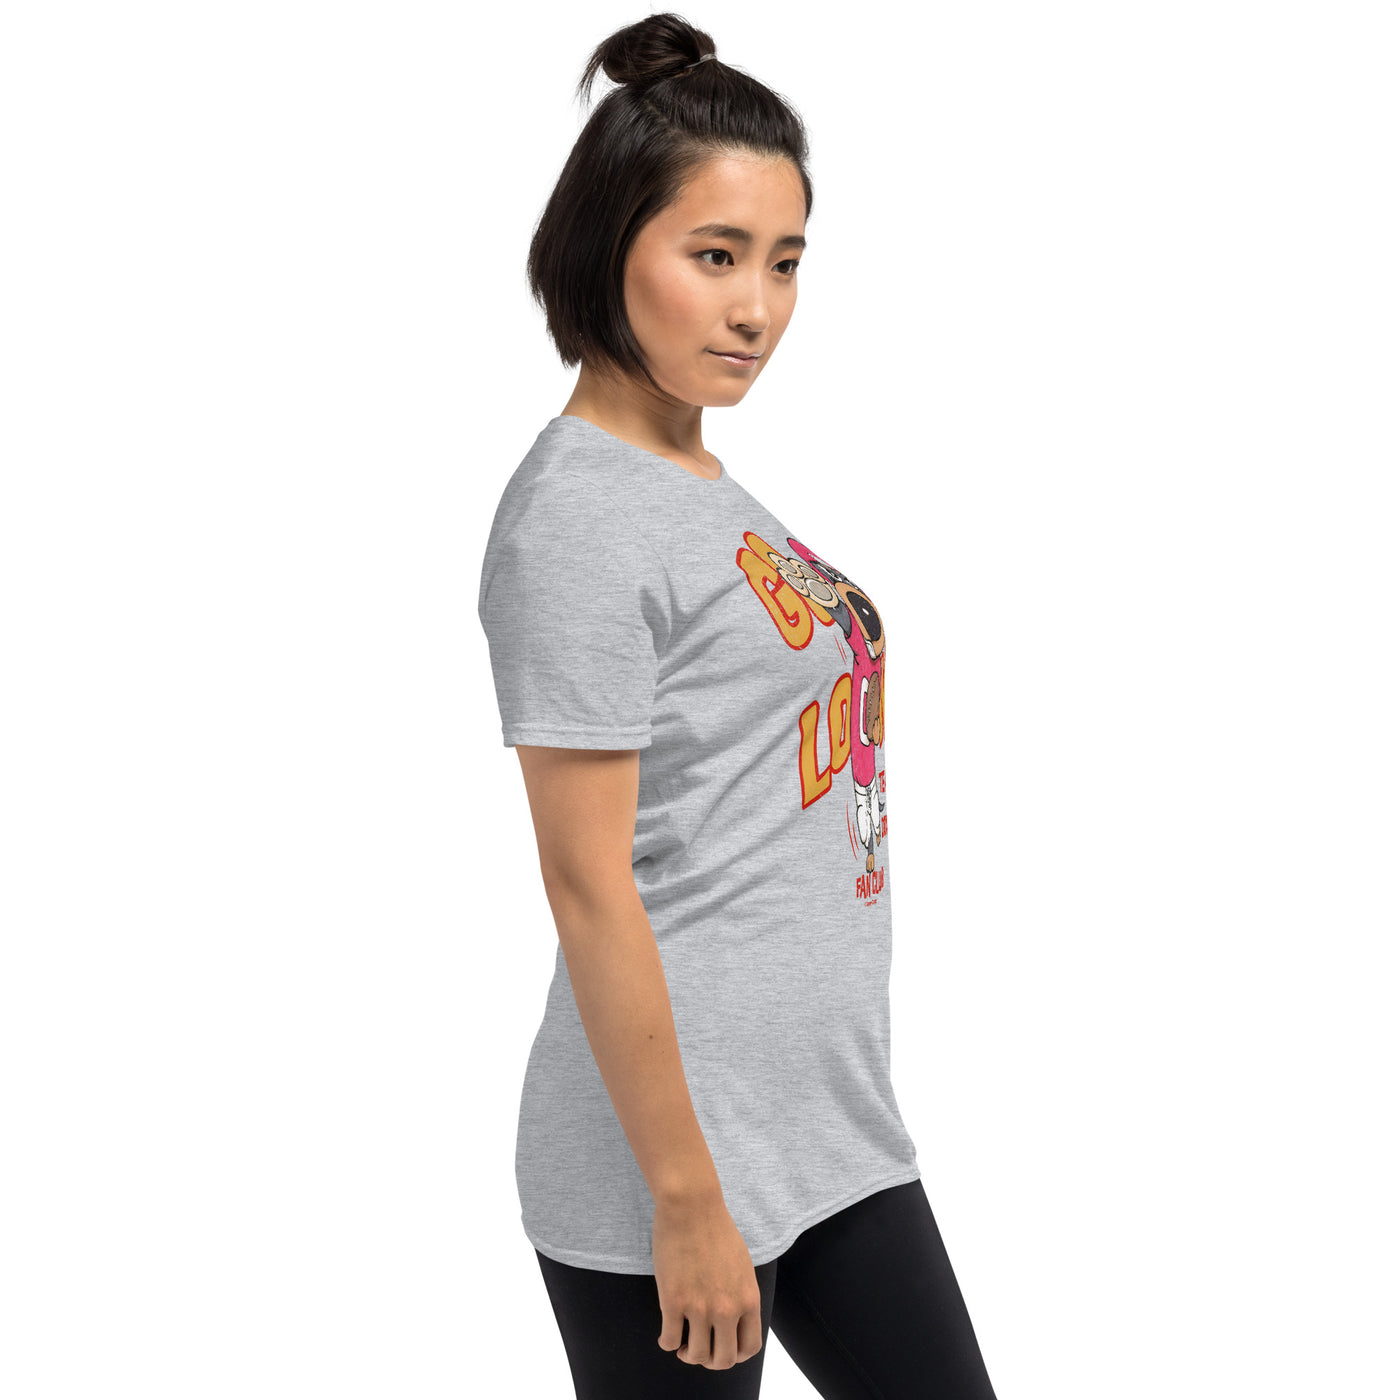 Cute Go Long Football Doxie Dachshund Unisex T-Shirt